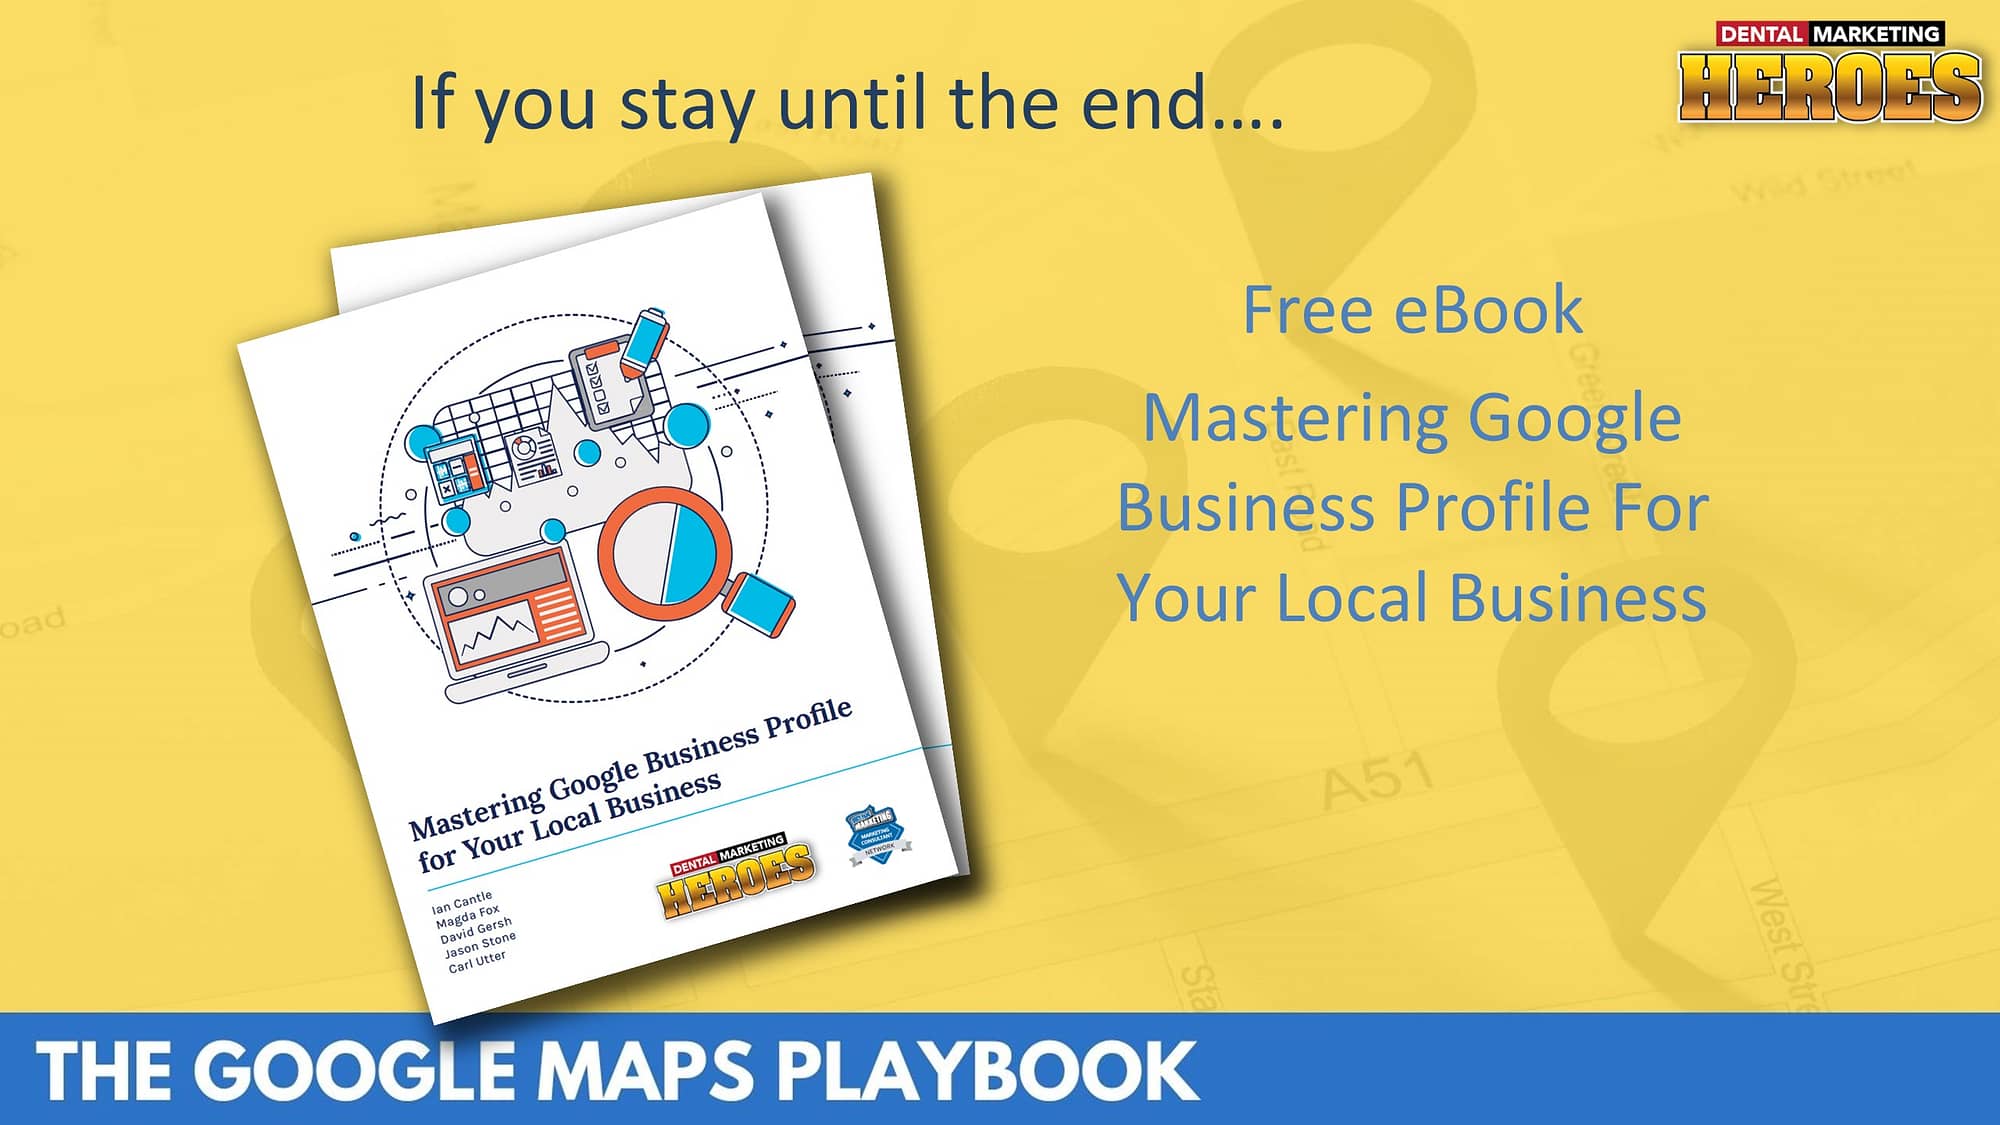 Webinar 6 - Google Maps - Free eBook-Mastering Google Business Profile